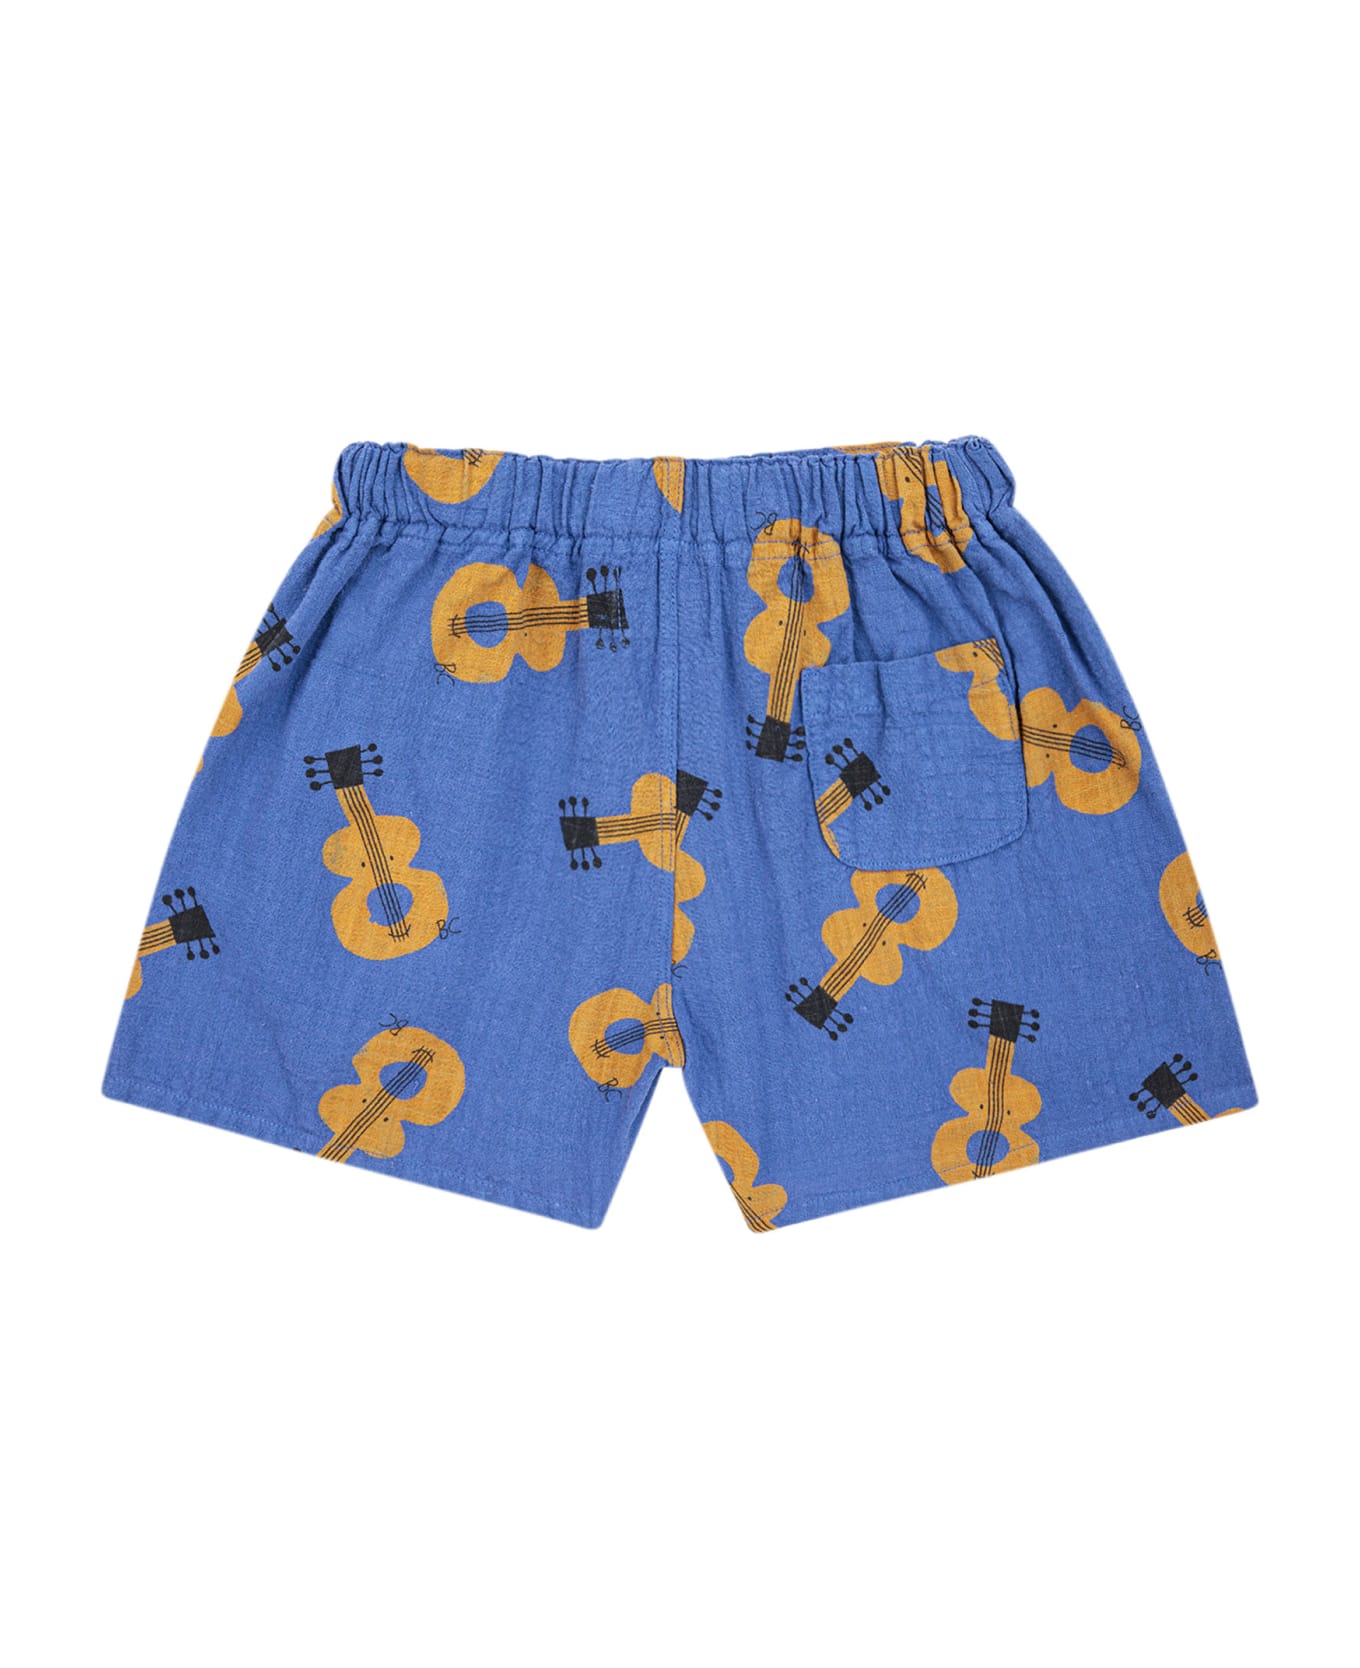 Bobo Choses Blue Shorts For Kids - Blue ボトムス